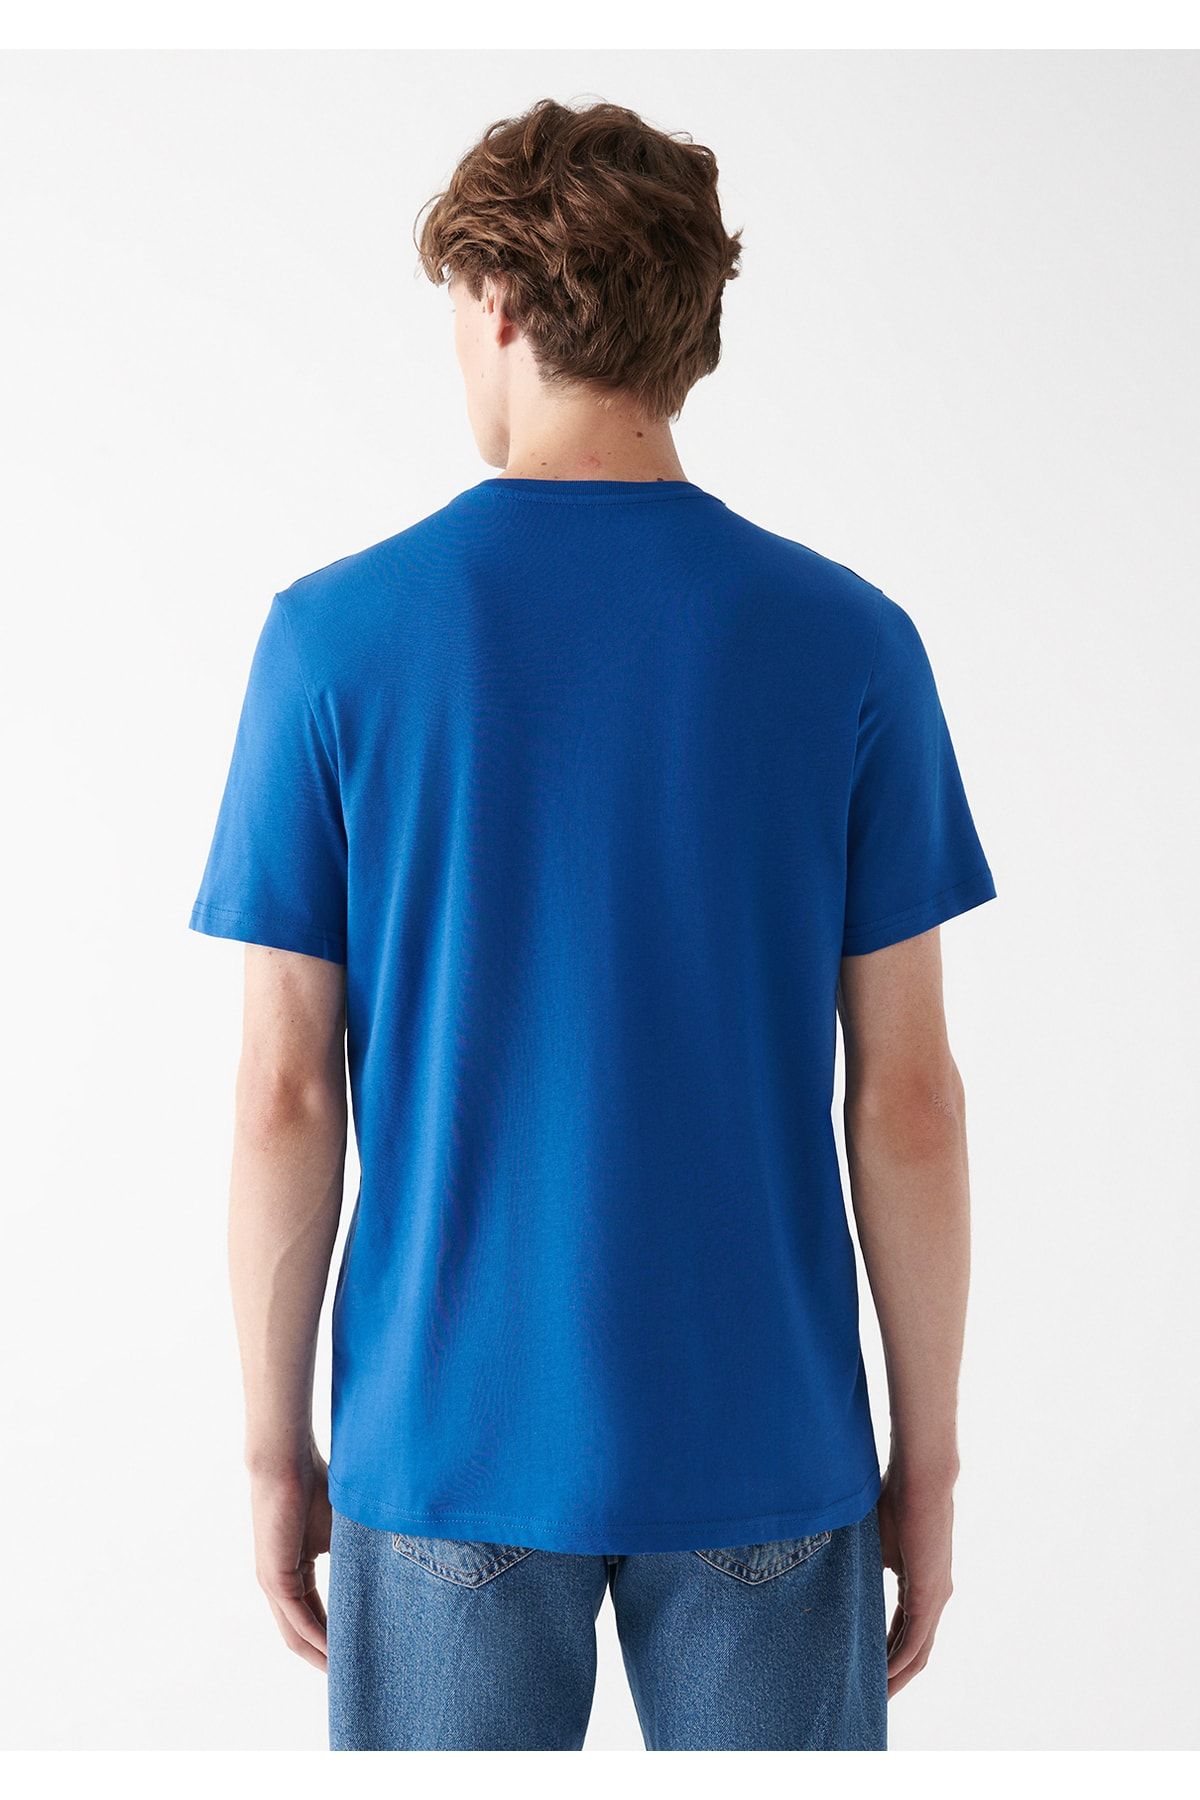 Mavi تی شرت کاشی چاپی استانبول مناسب / برش معمولی 067116-80956